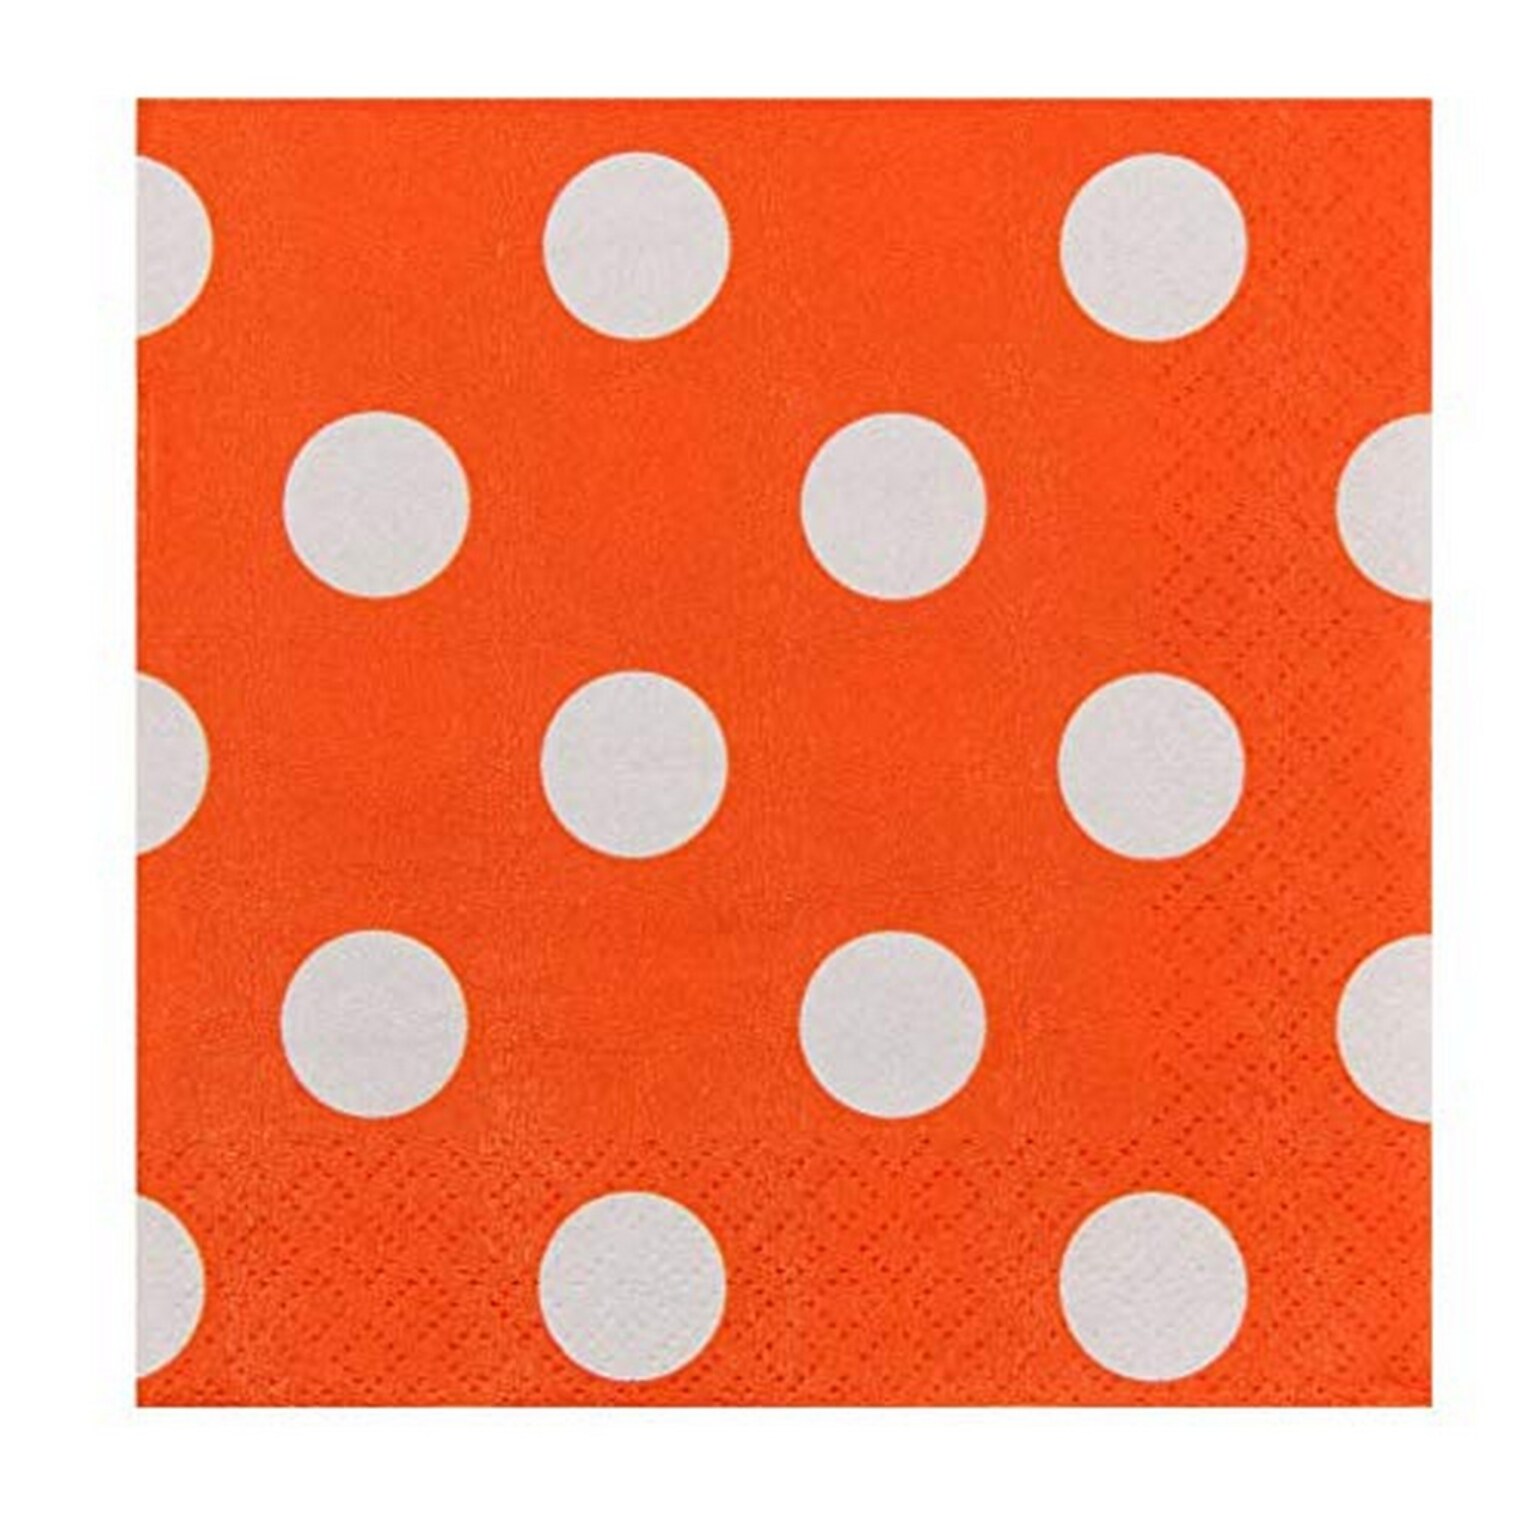 JAM PAPER Small Polka Dot Beverage Napkins, 5 x 5, Orange with Polka Dots, 16/Pack